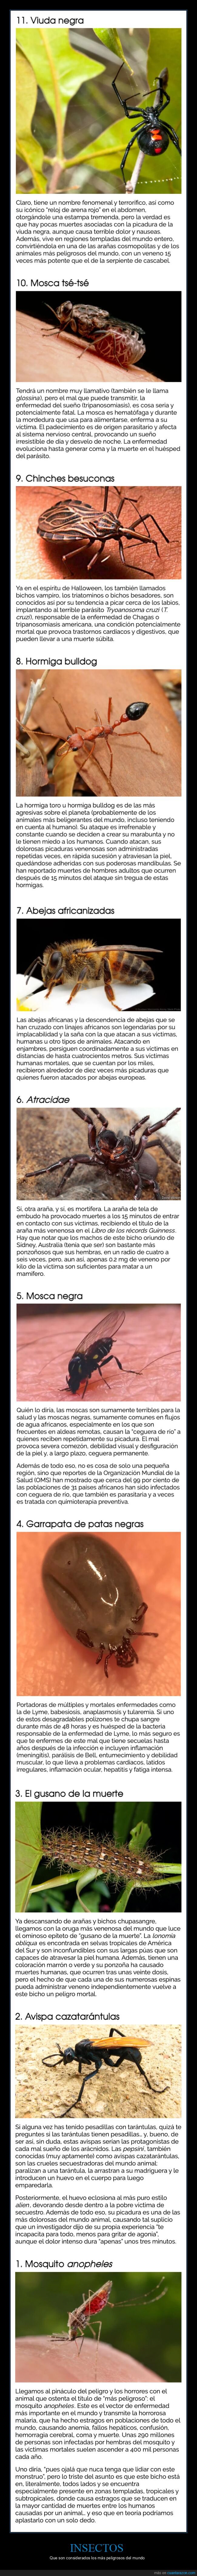 insectos,peligrosos